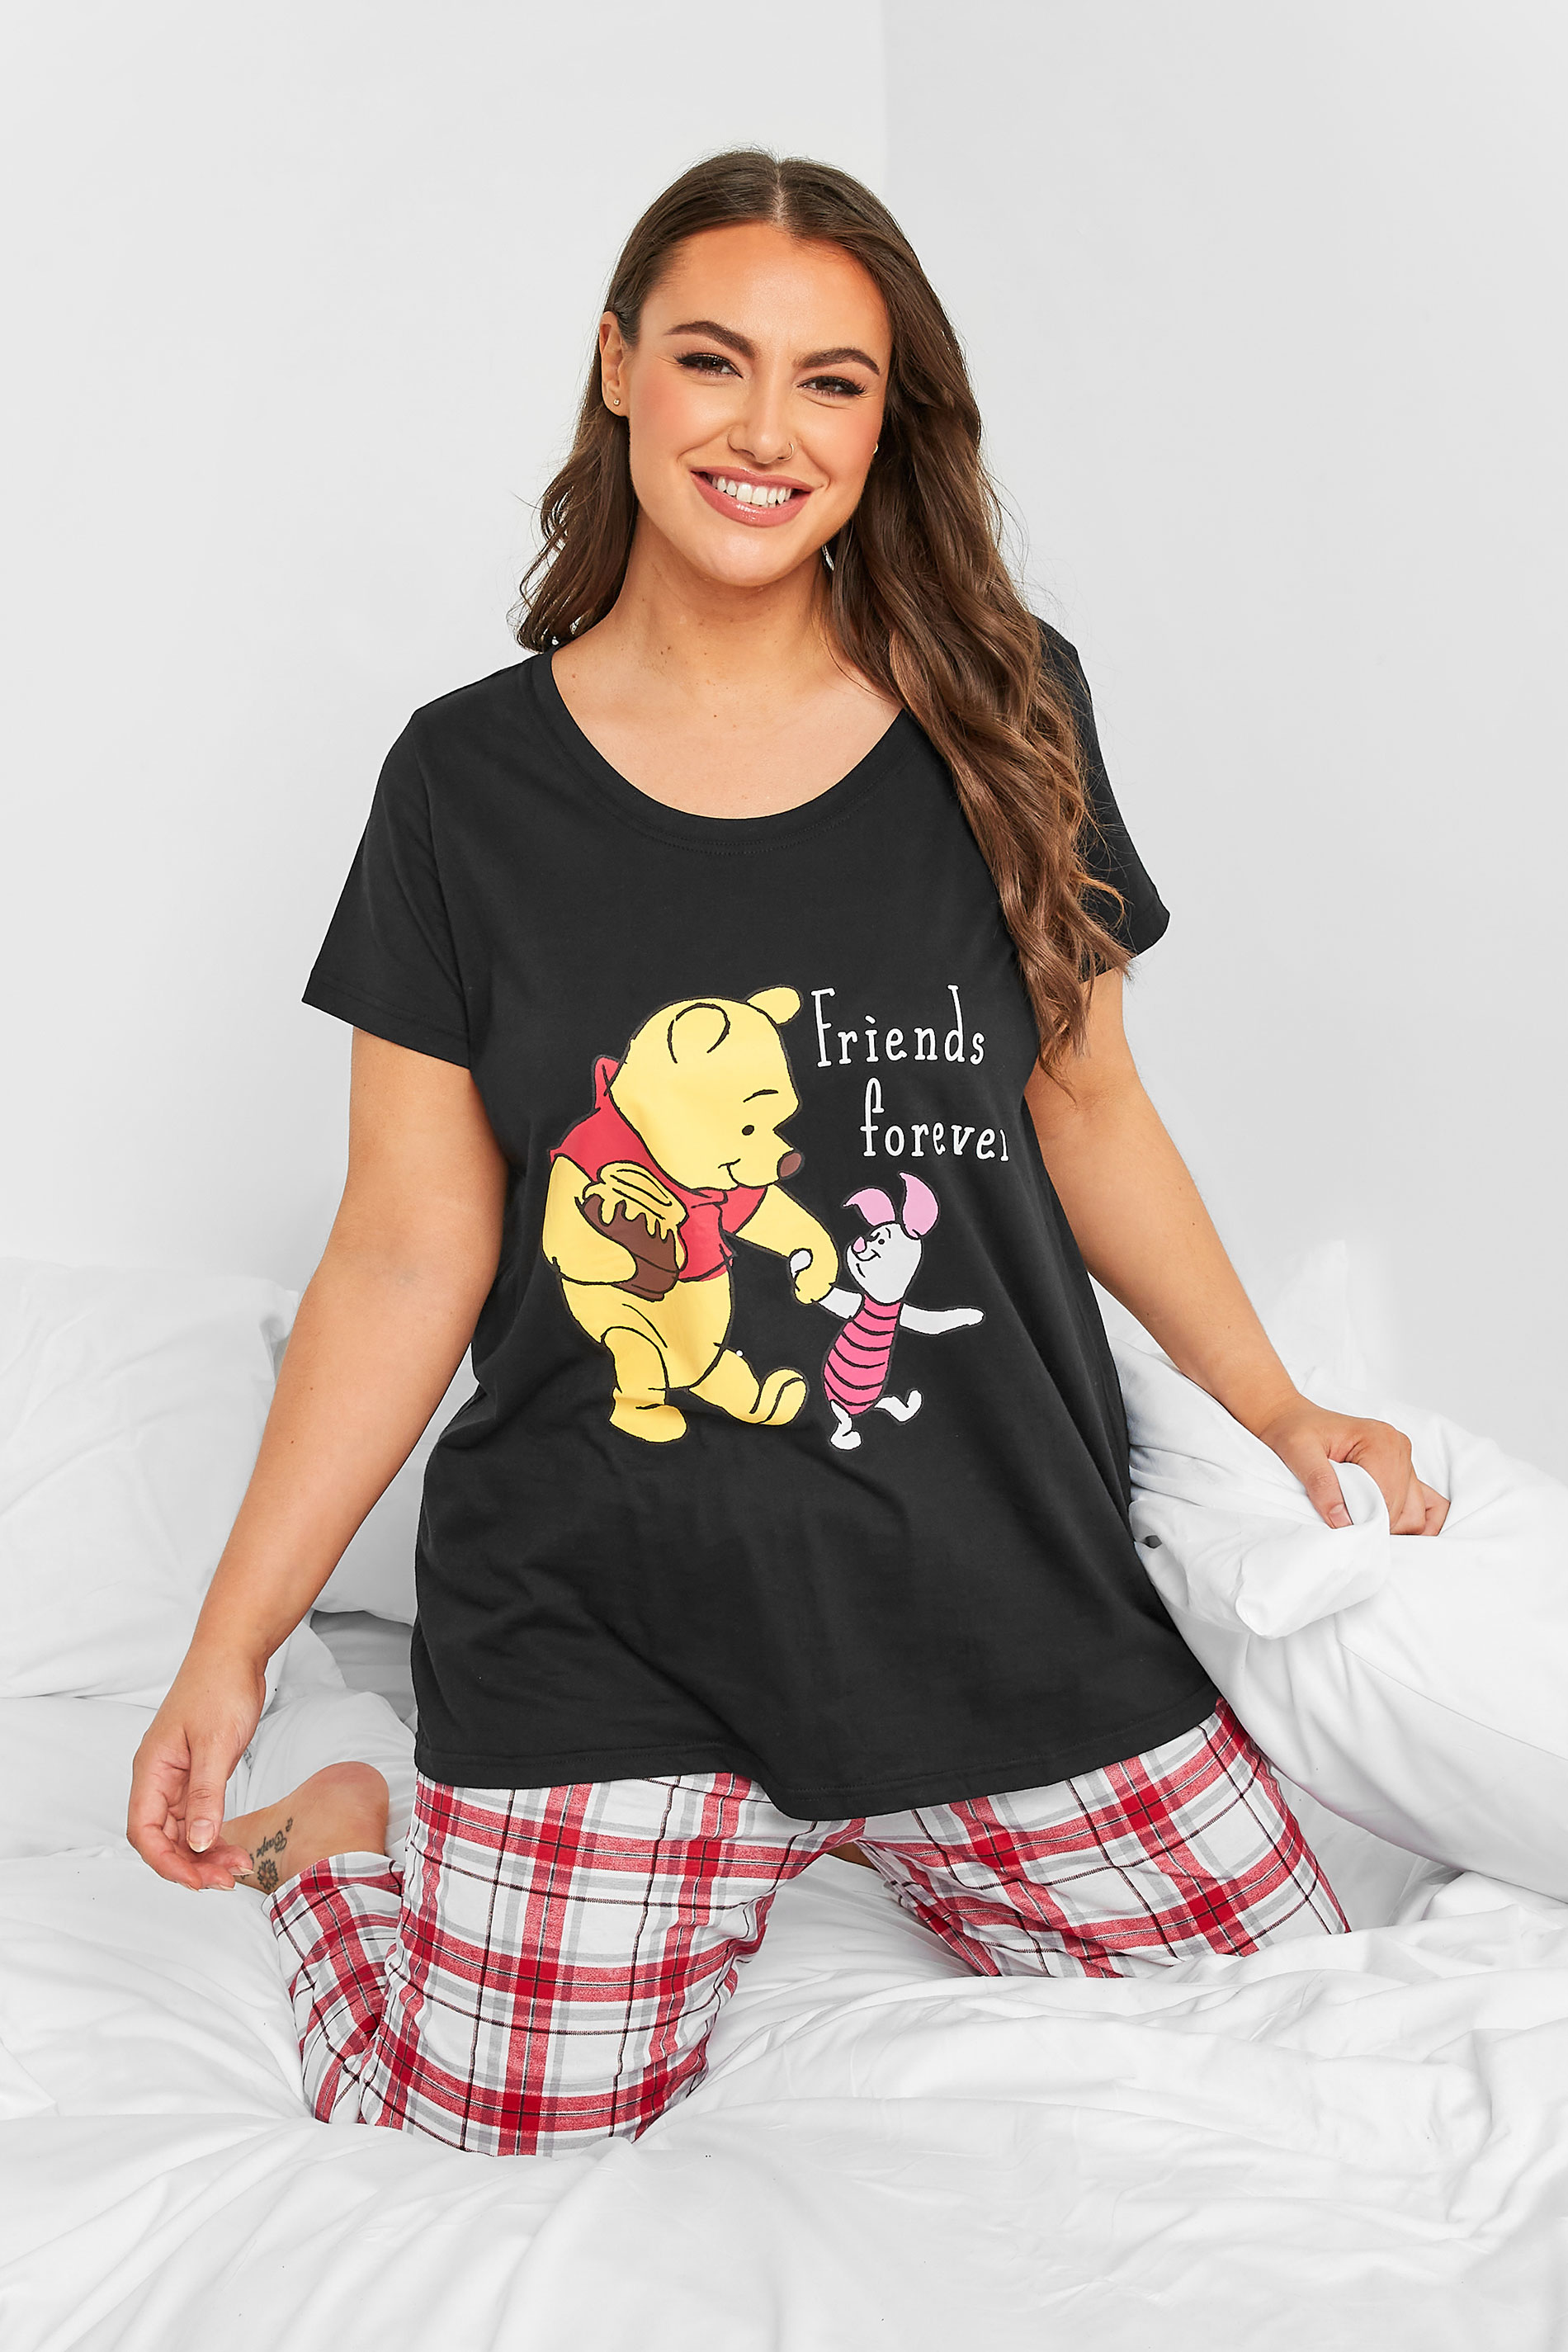 2 Piece PJs Set with Long Sleeve and Animal Print Leggings Cotton Nightwear Woman Pyjamas Disney Lion King Pyjamas for Women Loungewear Available in Size 8 to 16 